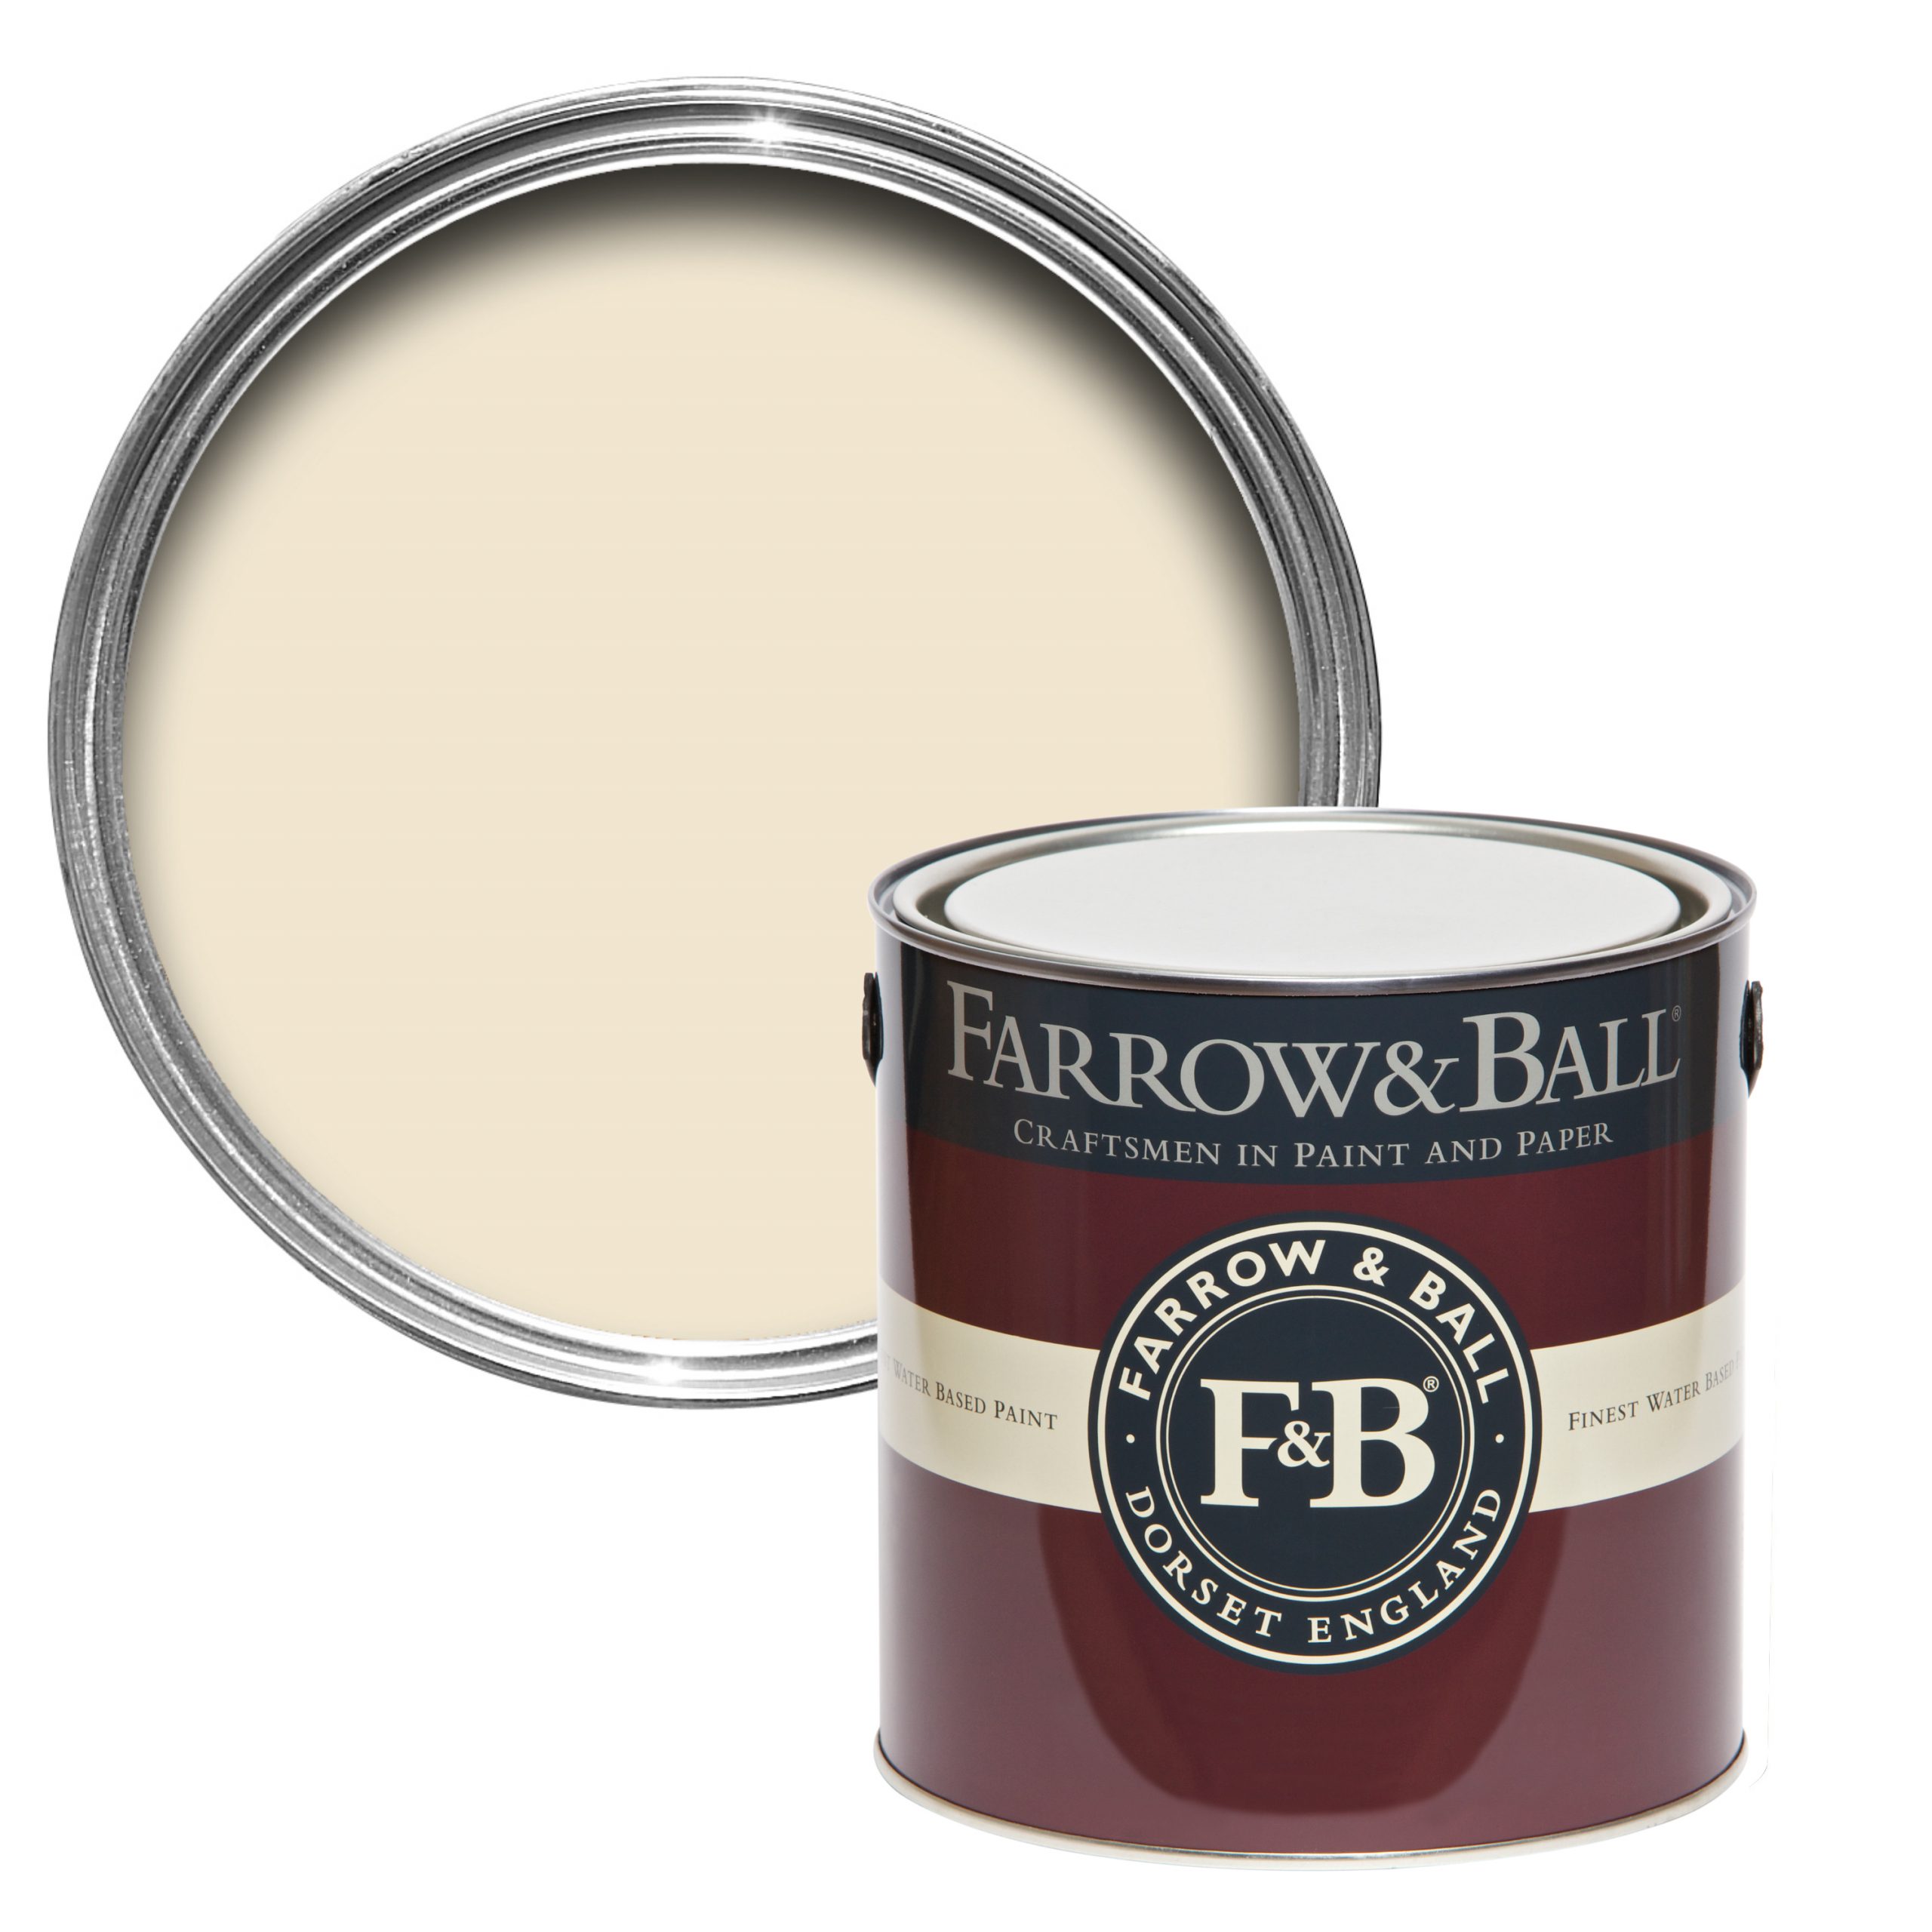 Vopsea alba satinata 20% luciu pentru exterior Farrow & Ball Exterior Eggshell White Tie No. 2002 2.5 Litri